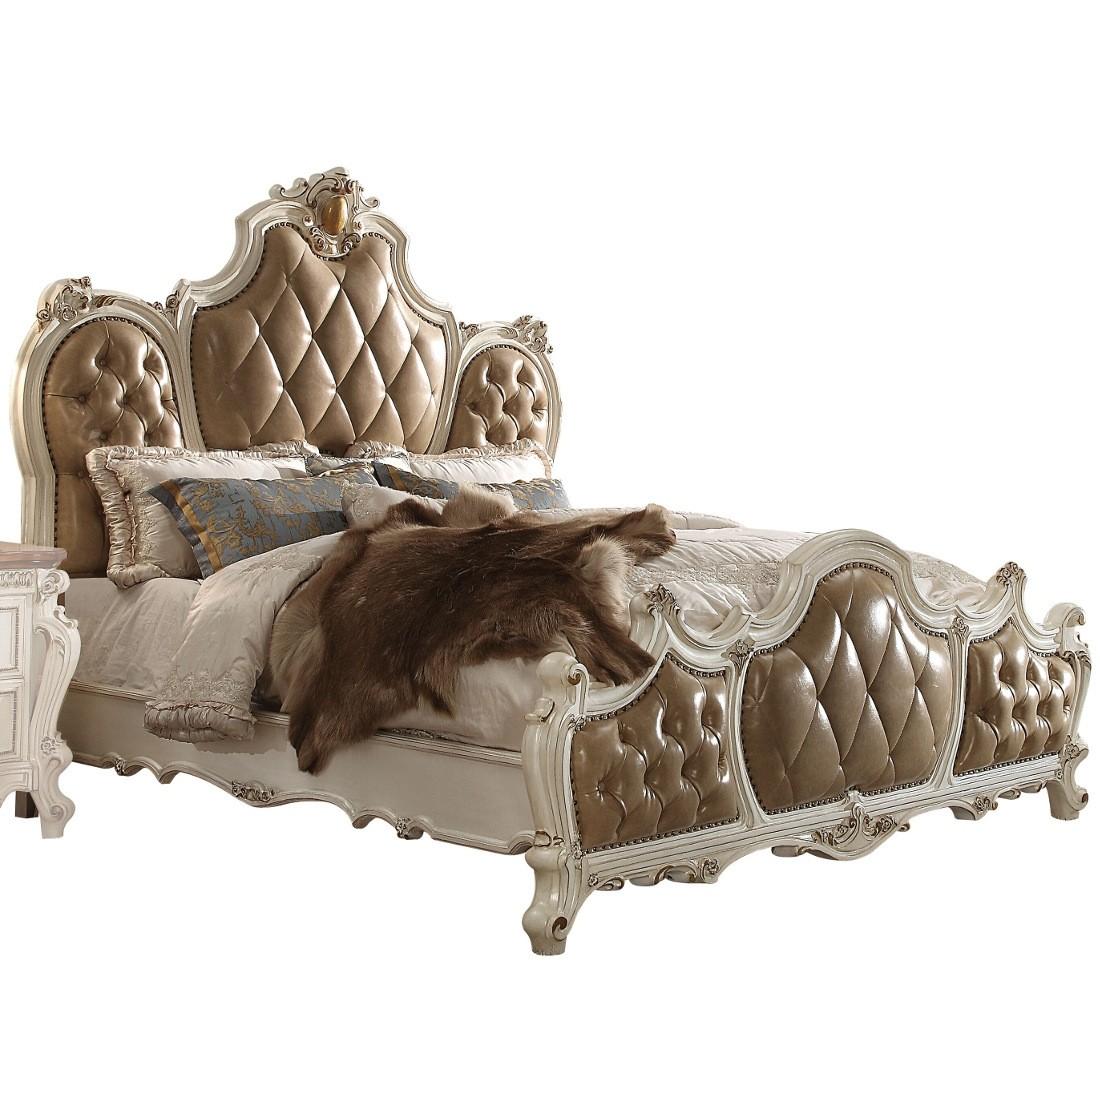 

    
Antique Pearl & Brown Tufted King Bedroom Set 3P Picardy 26897EK Acme Classic
